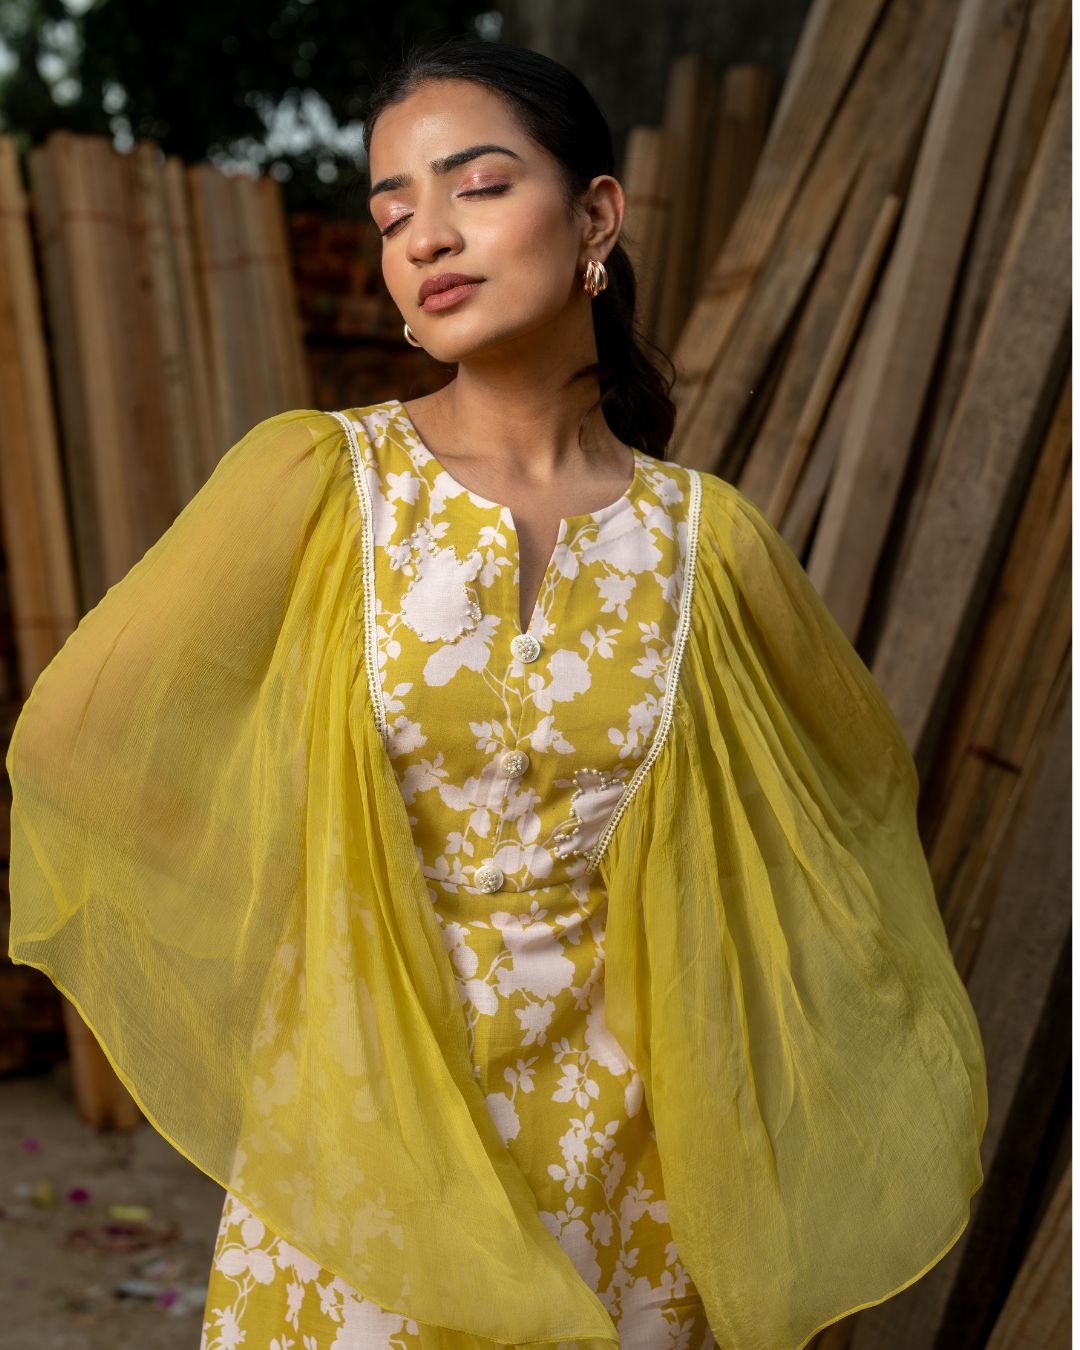 Rassian Sage - Yellow Printed Midi Dress with Chiffon Sleeves